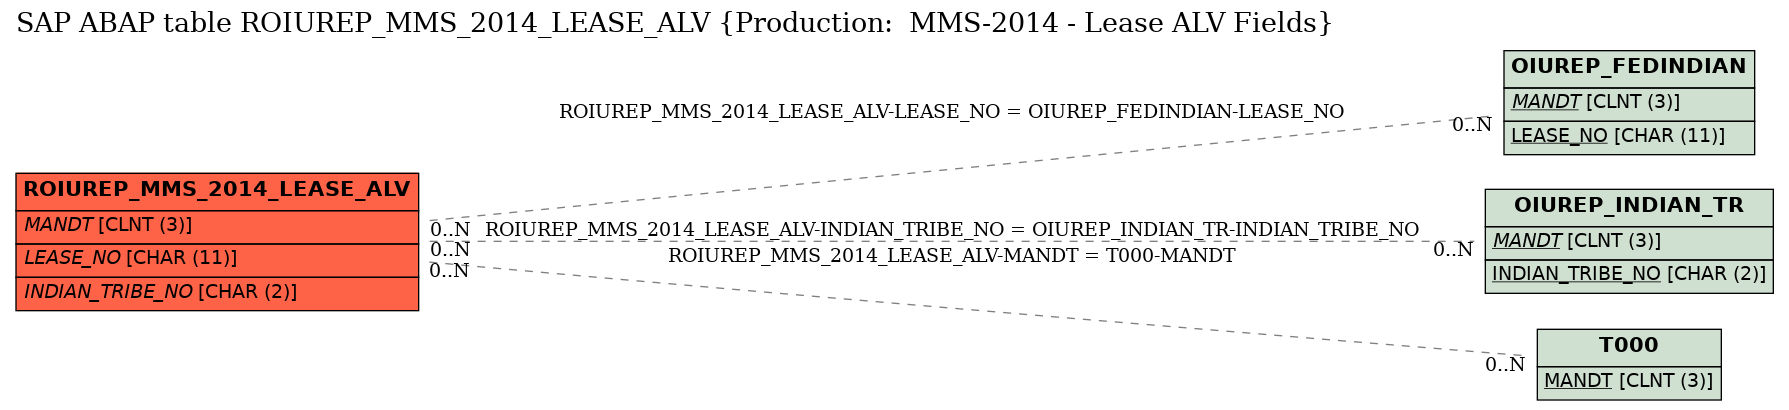 E-R Diagram for table ROIUREP_MMS_2014_LEASE_ALV (Production:  MMS-2014 - Lease ALV Fields)